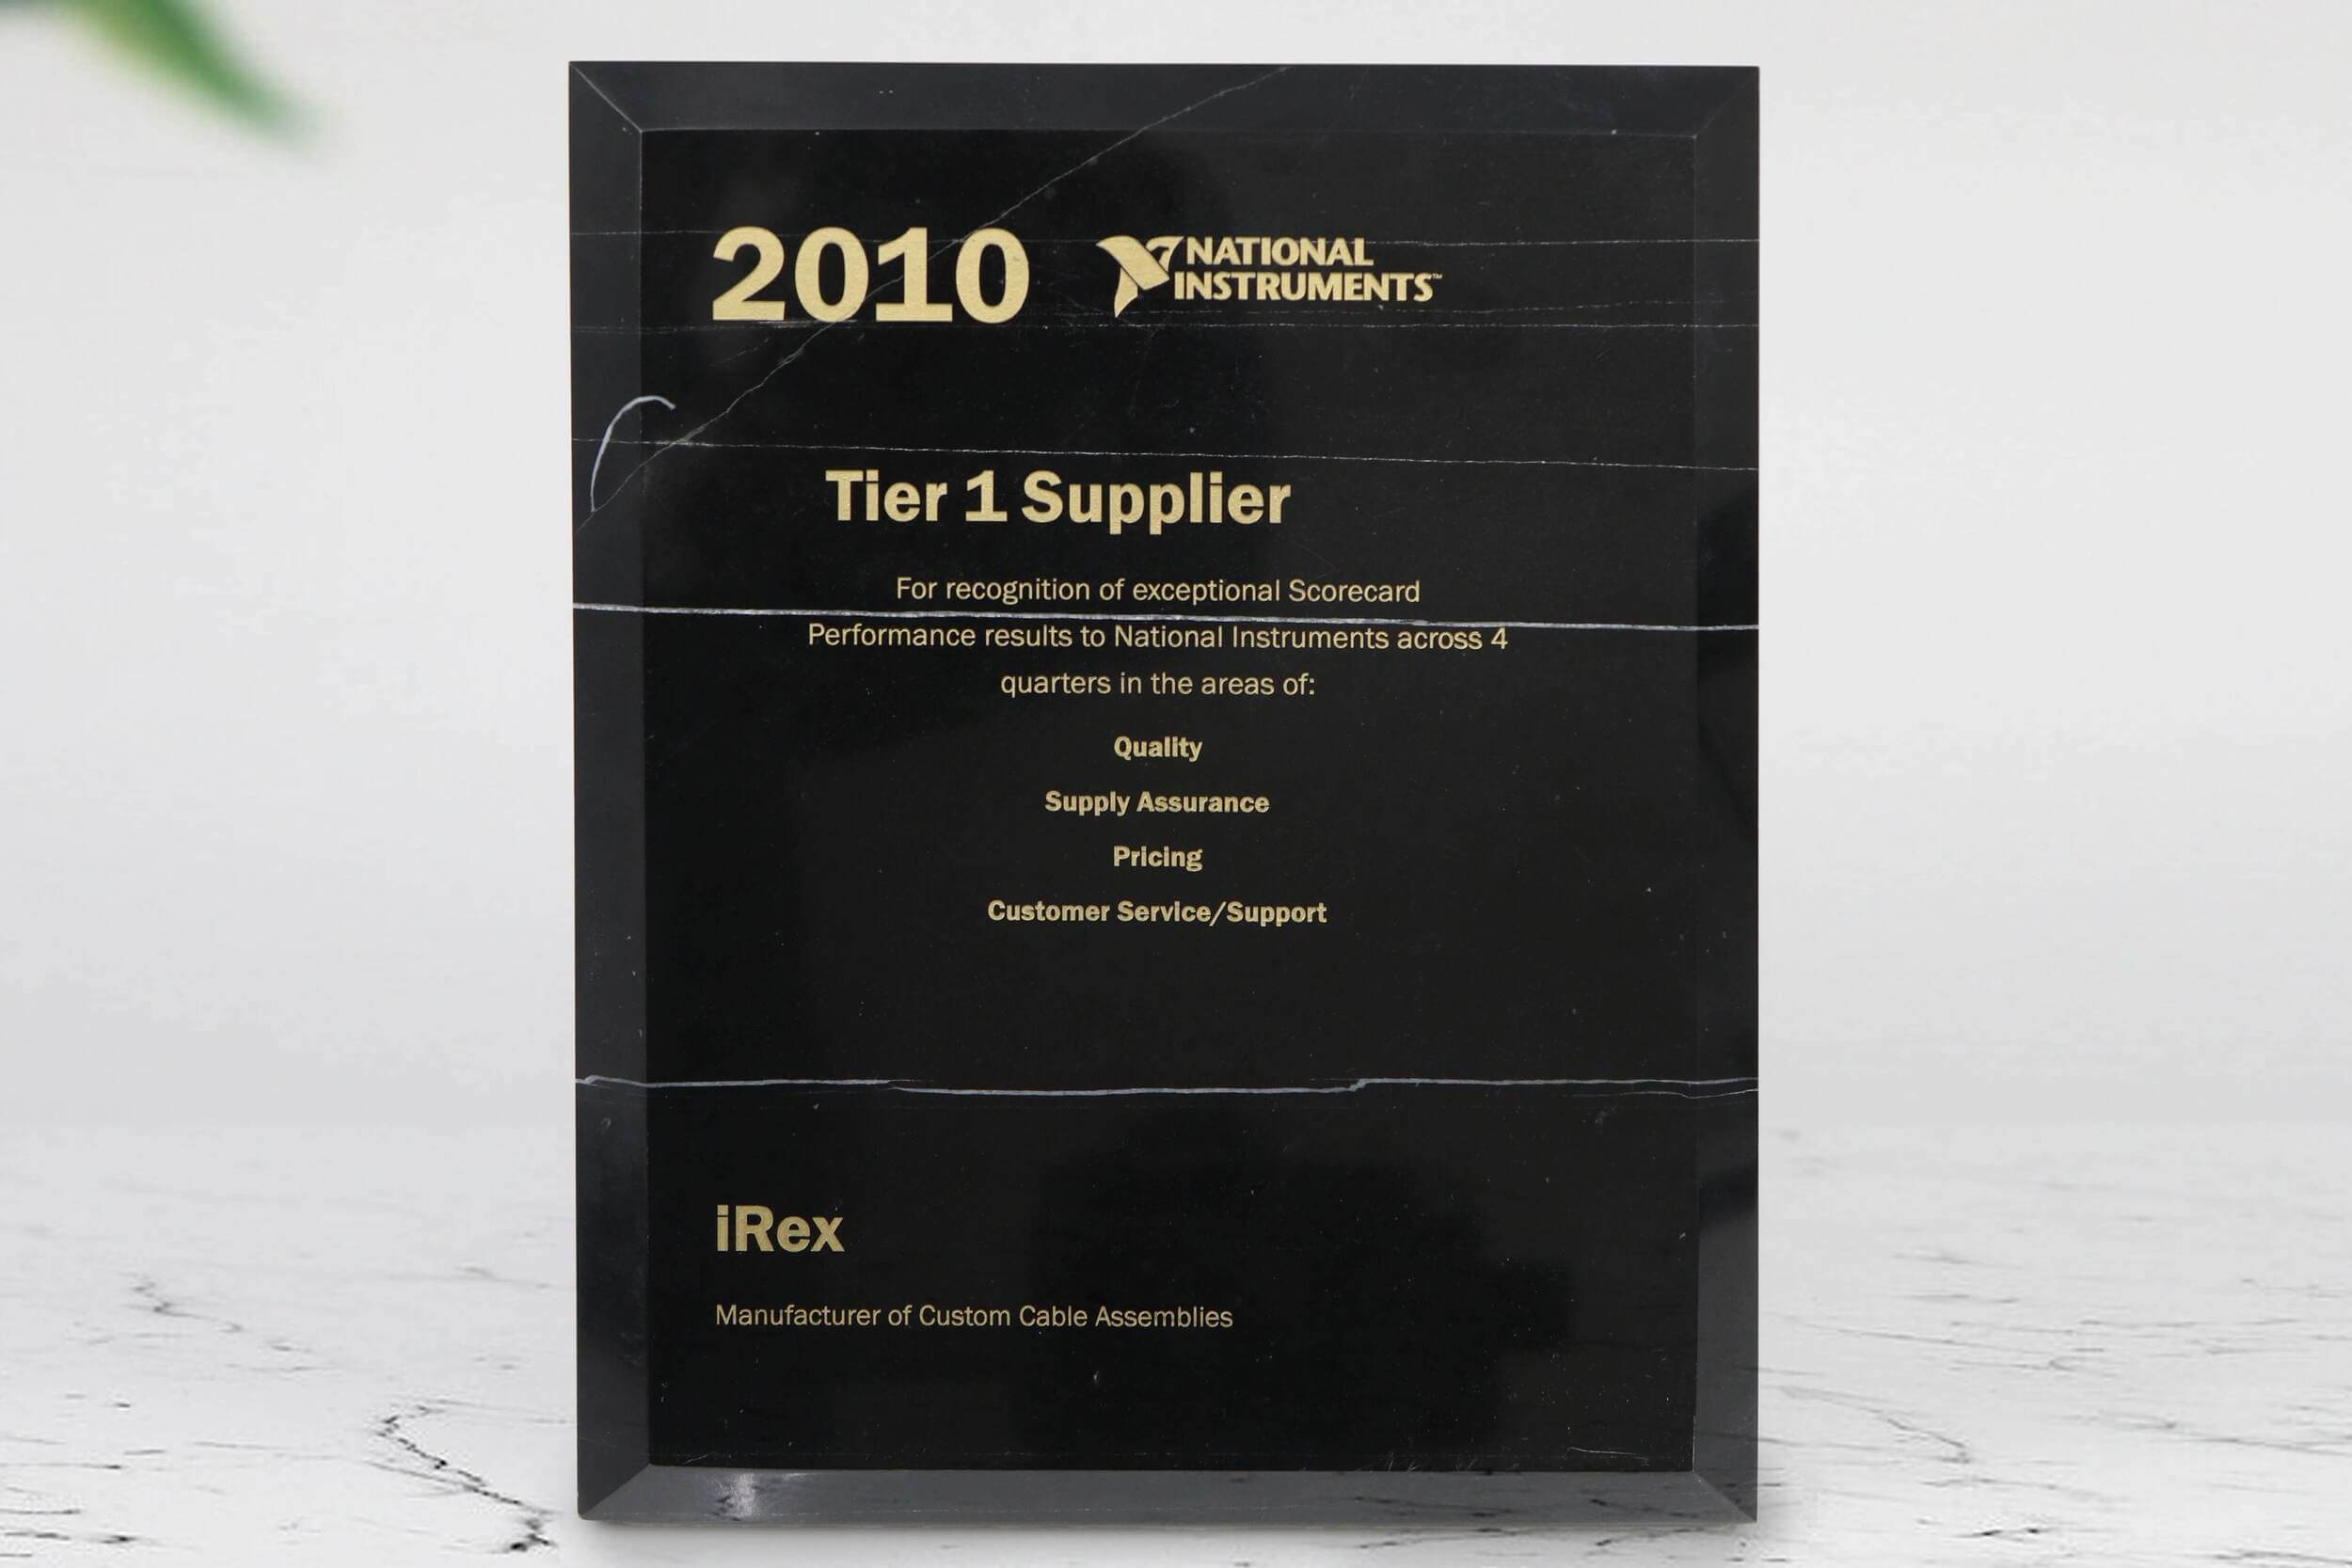 Awarded Tier 1 Supplier